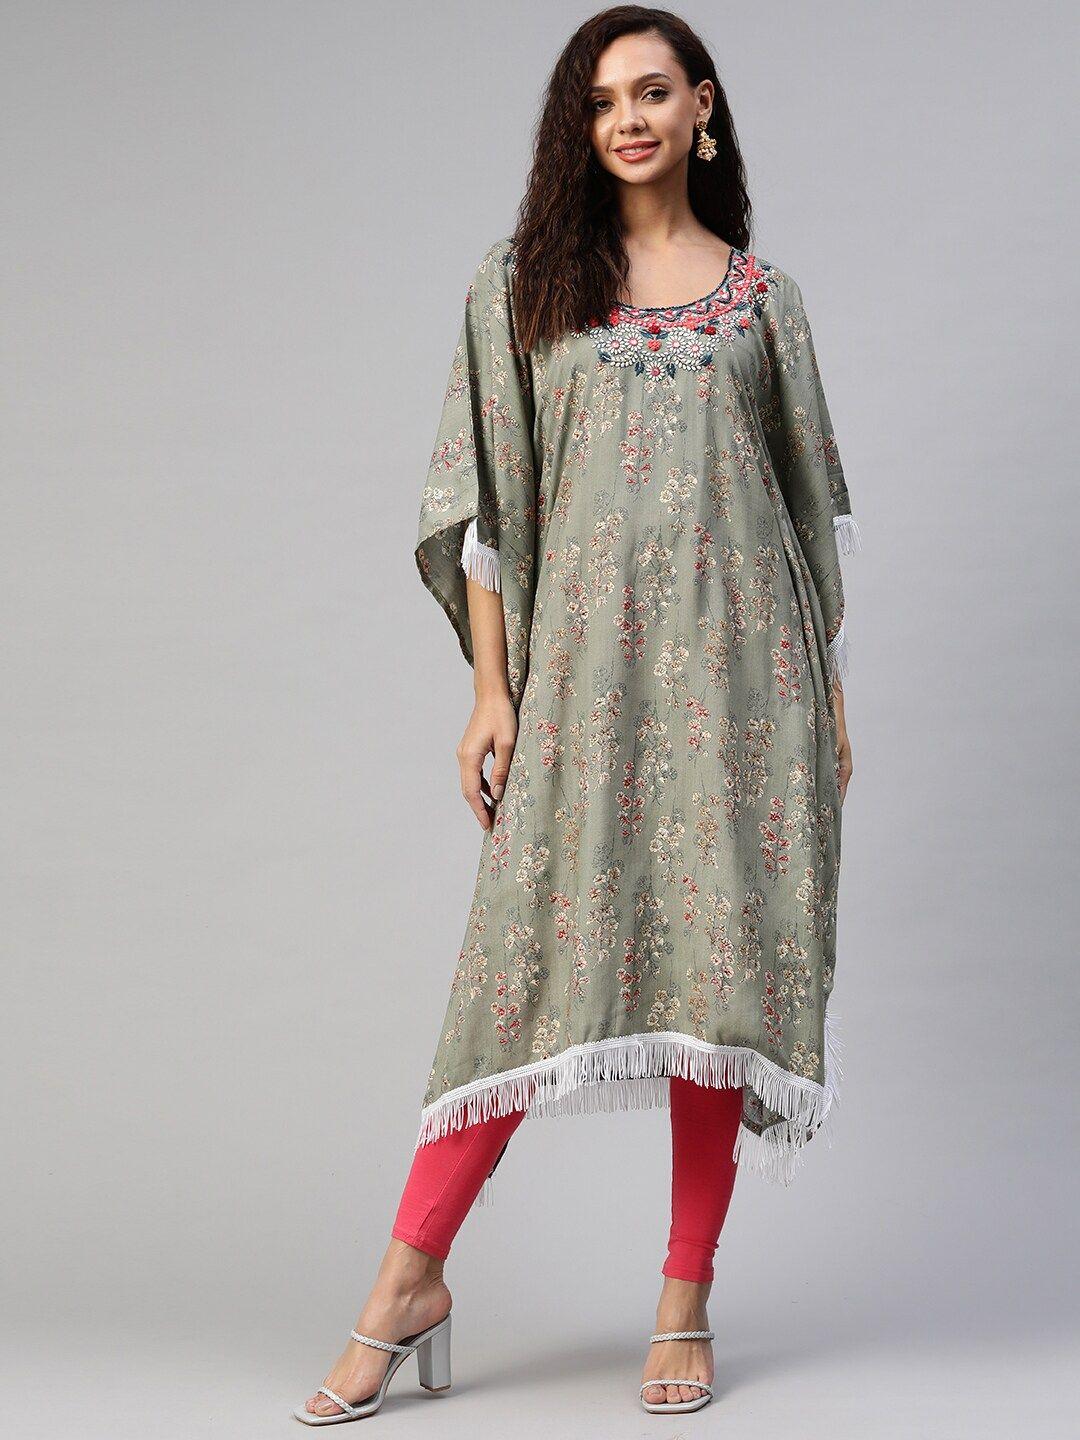 aarika women olive green floral printed flared sleeves floral pure cotton kaftan kurta